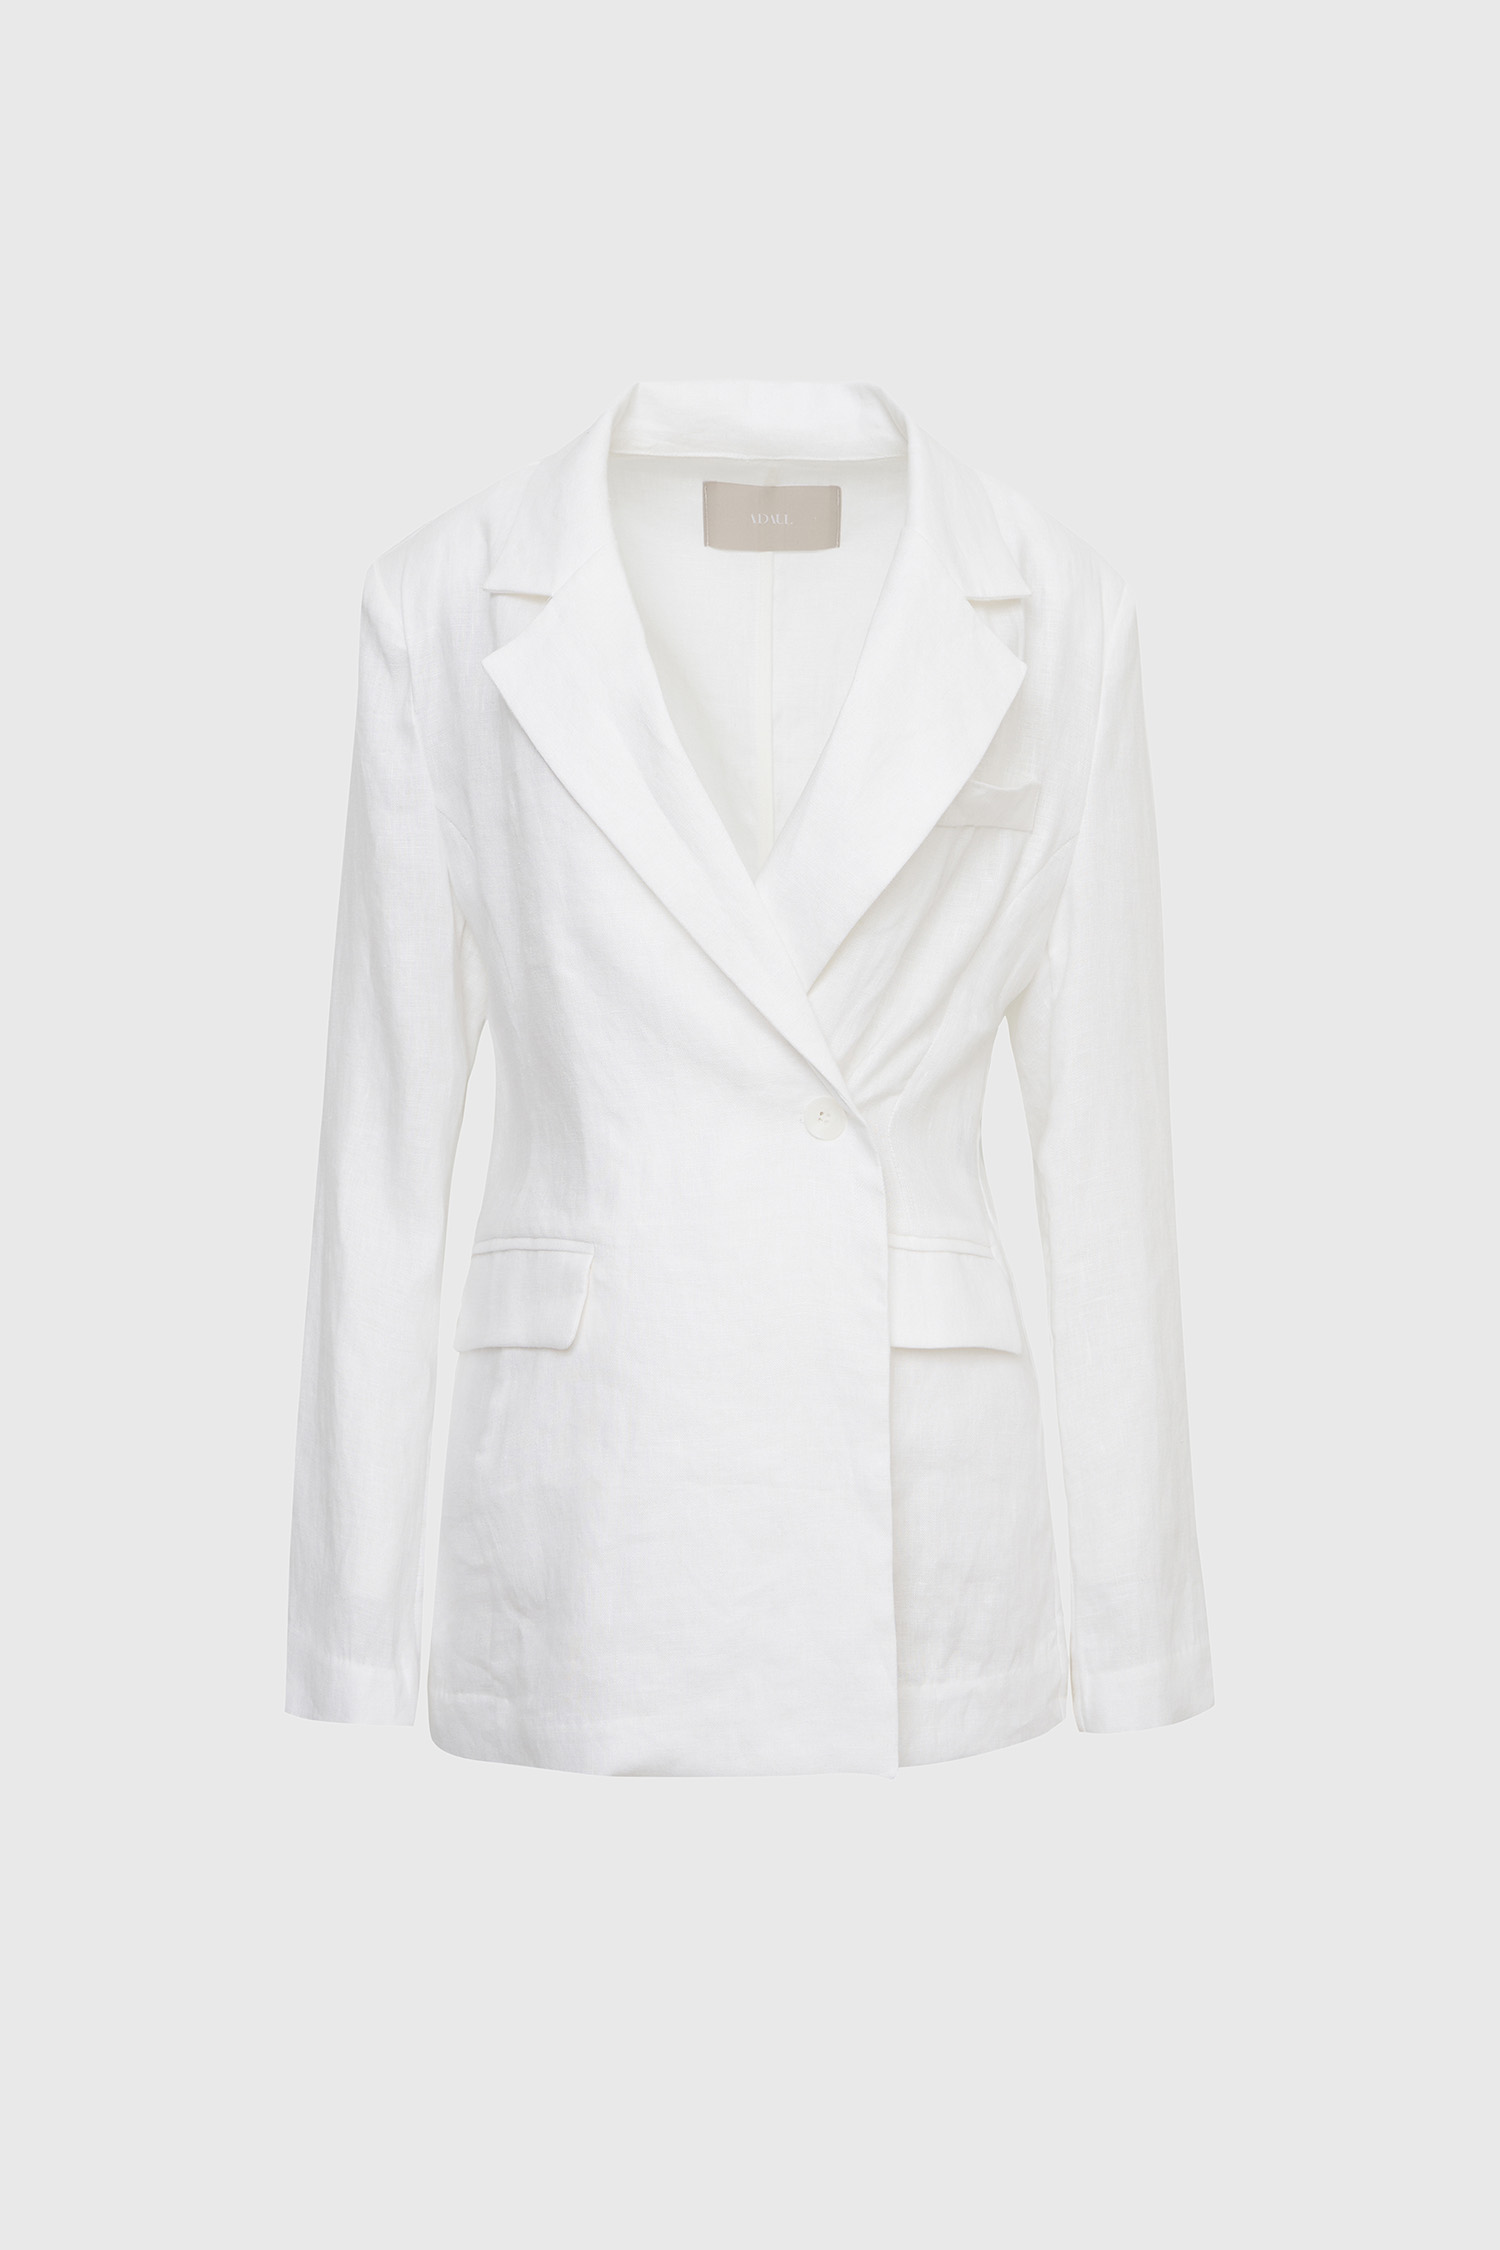 Linen two button point jacket - white